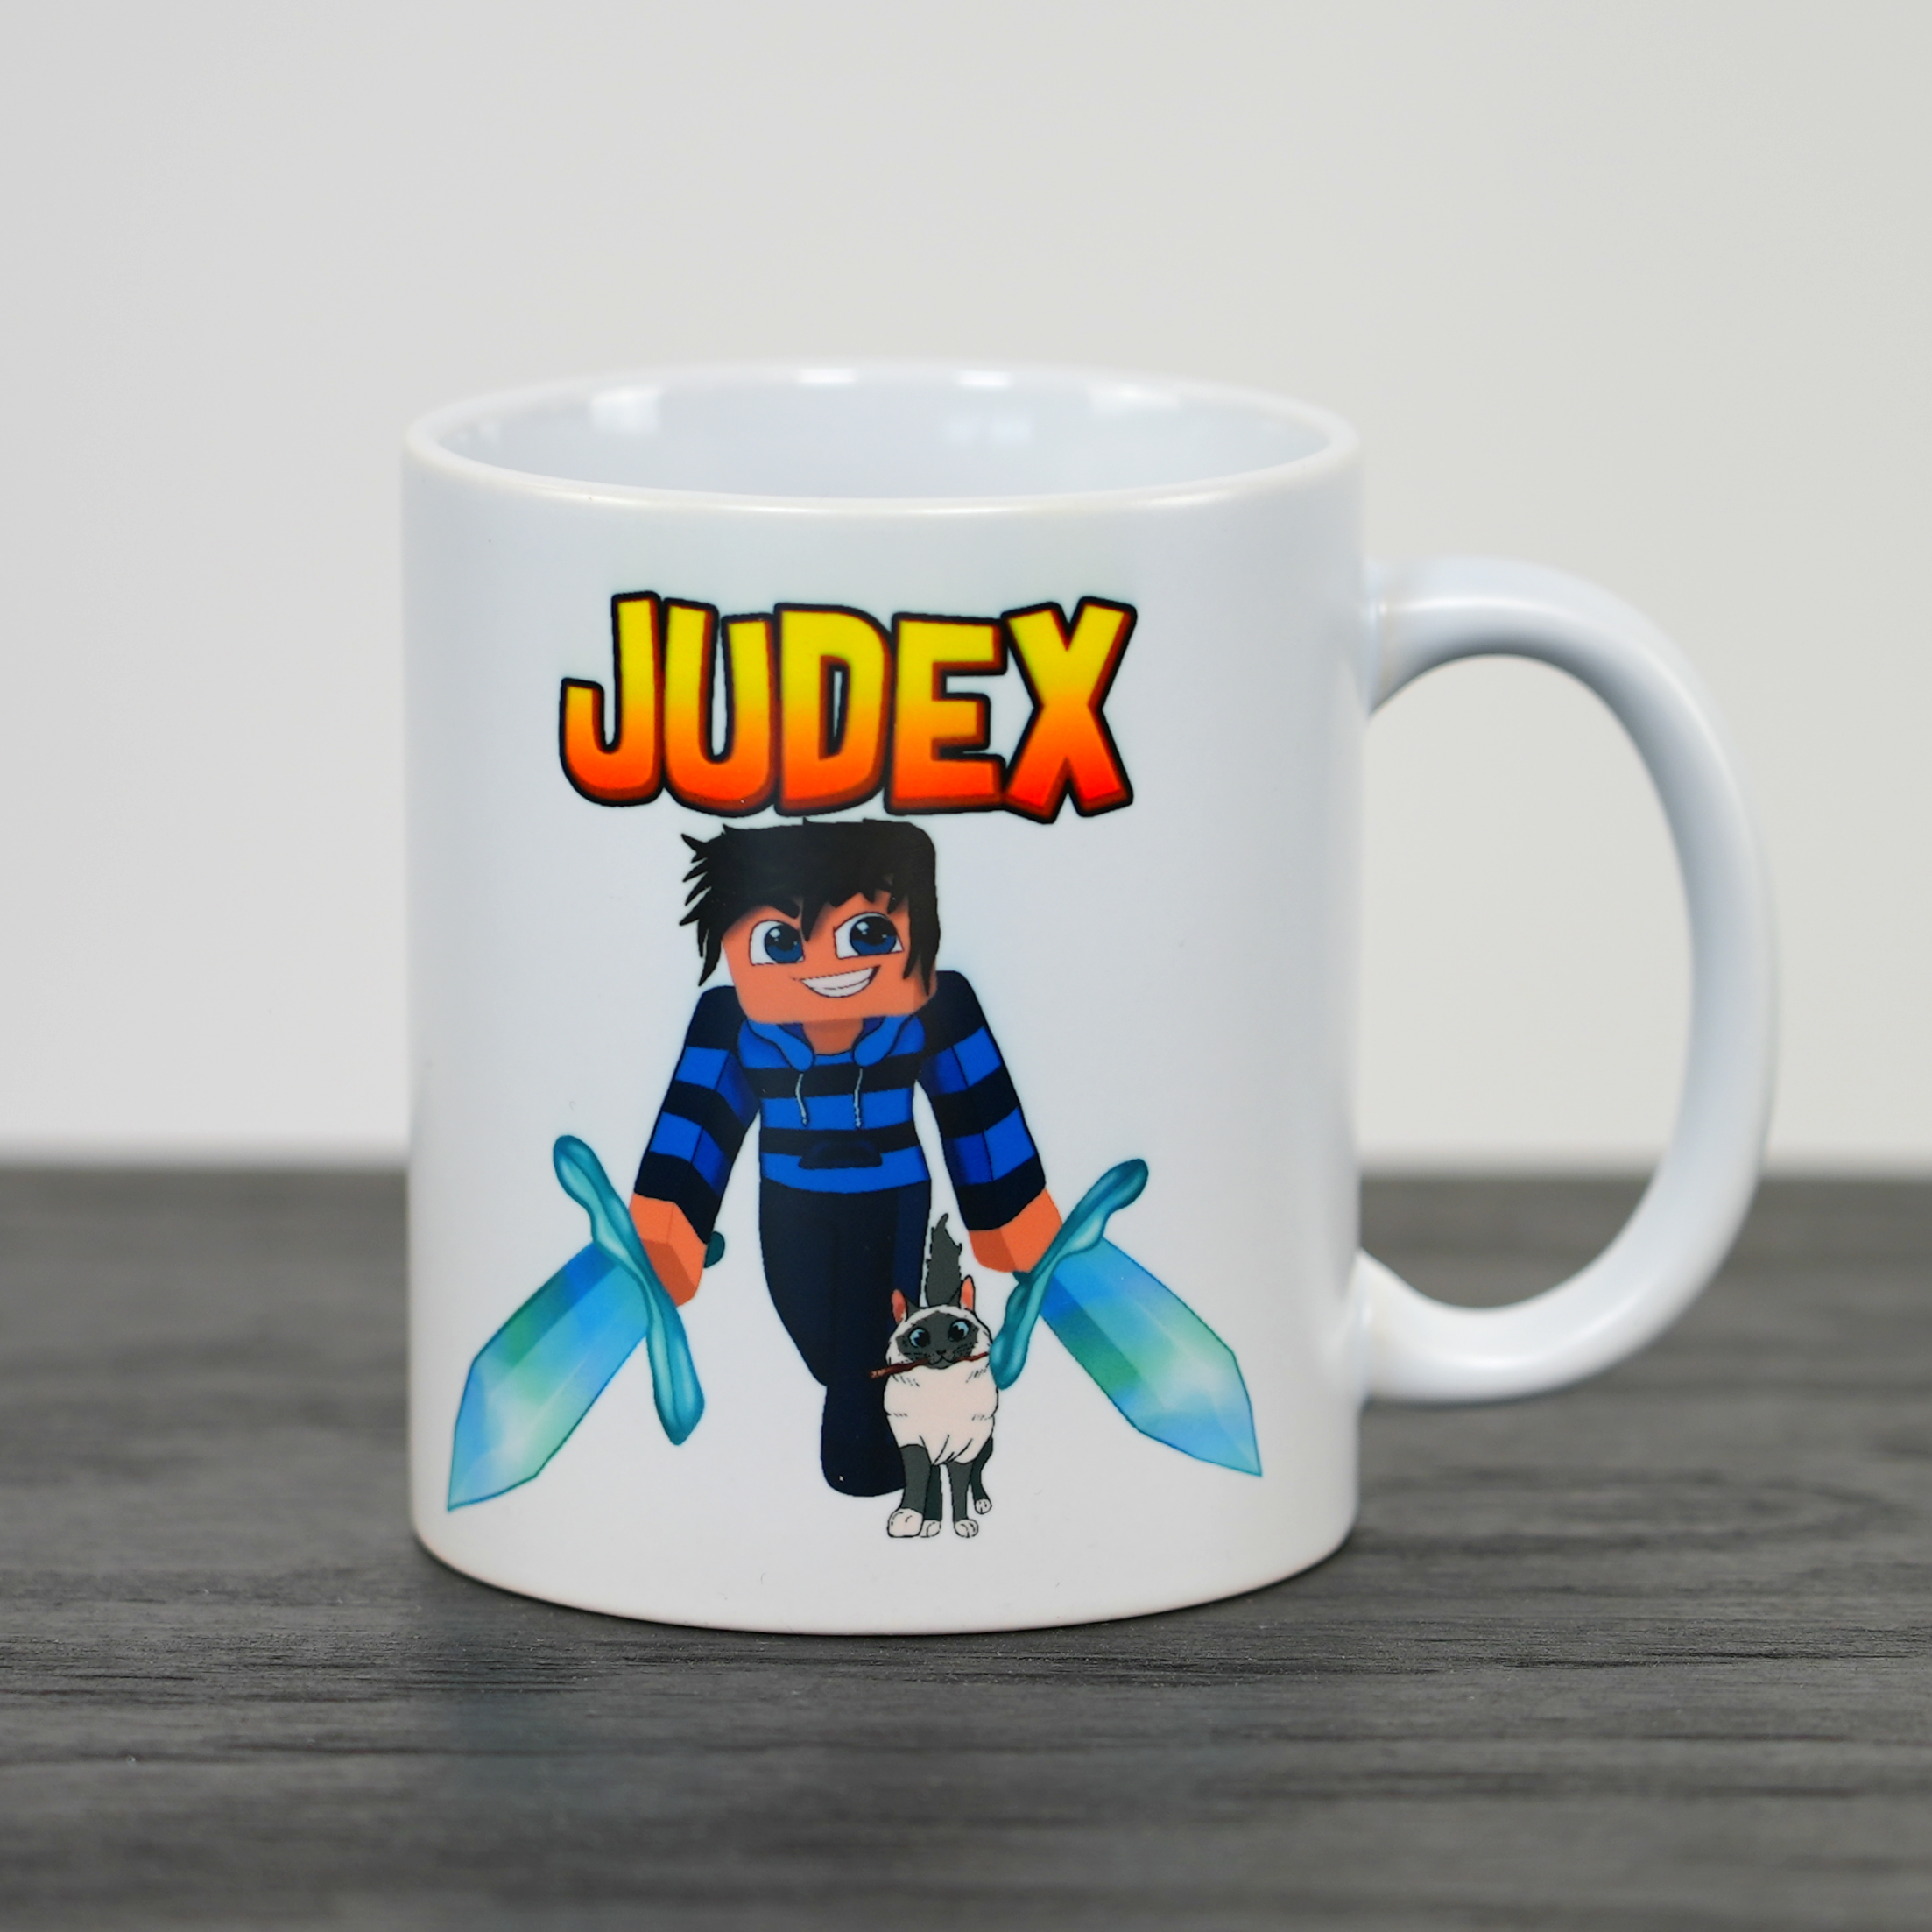 Judex Warrior Cup